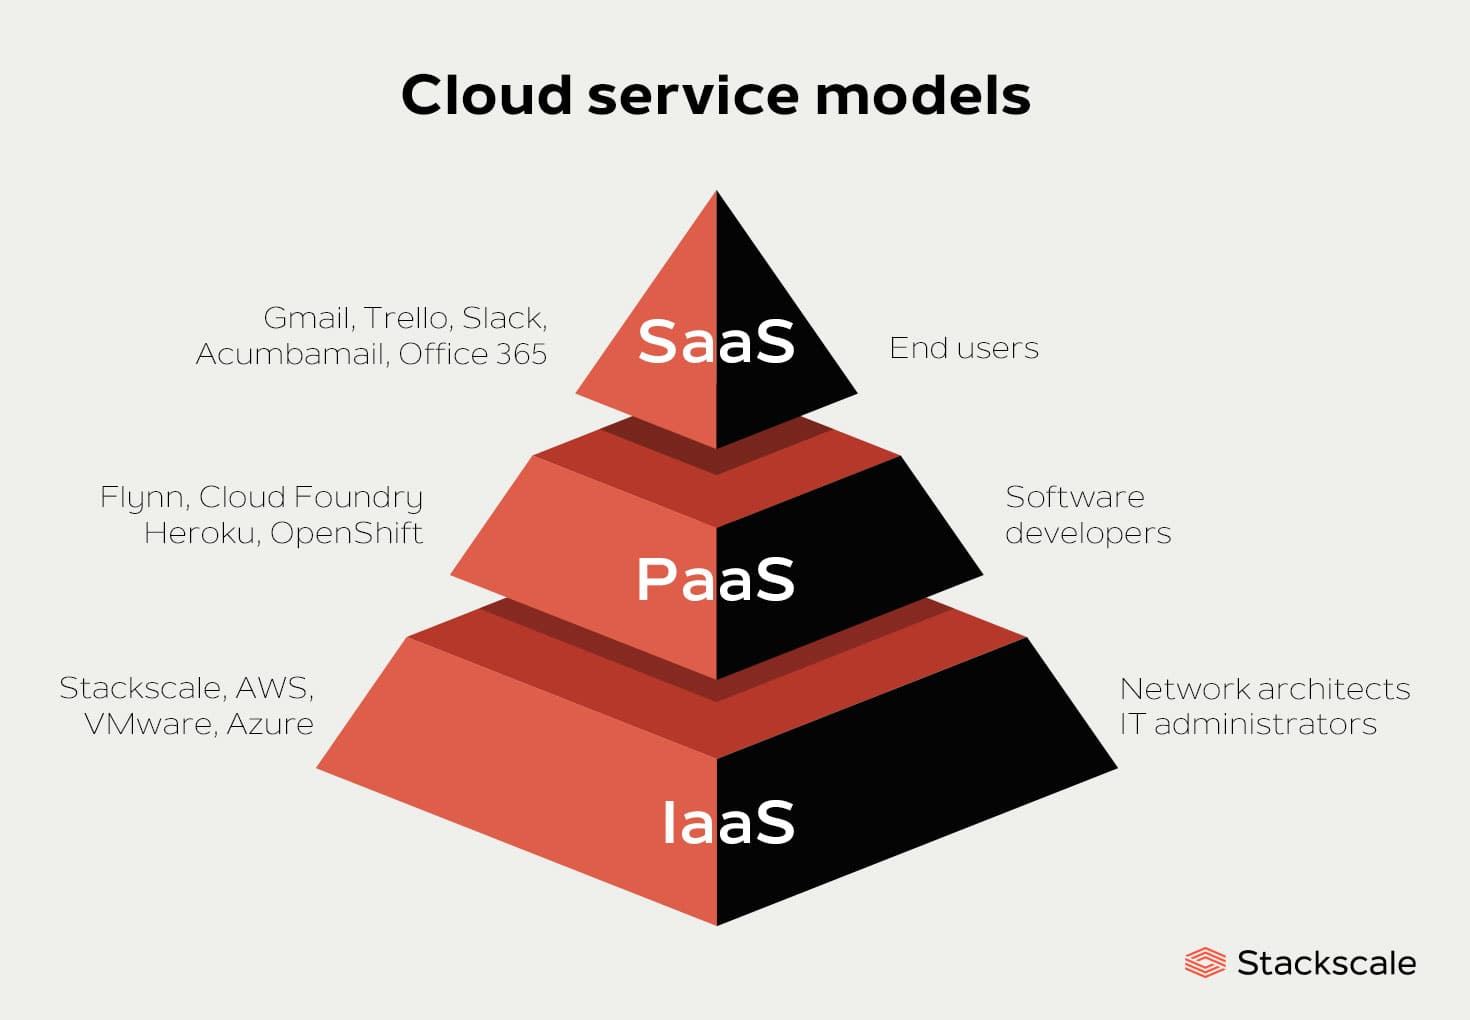 Иерархия IaaS, PaaS и SaaS (источник: https://www.stackscale.com/blog/cloud-service-models)